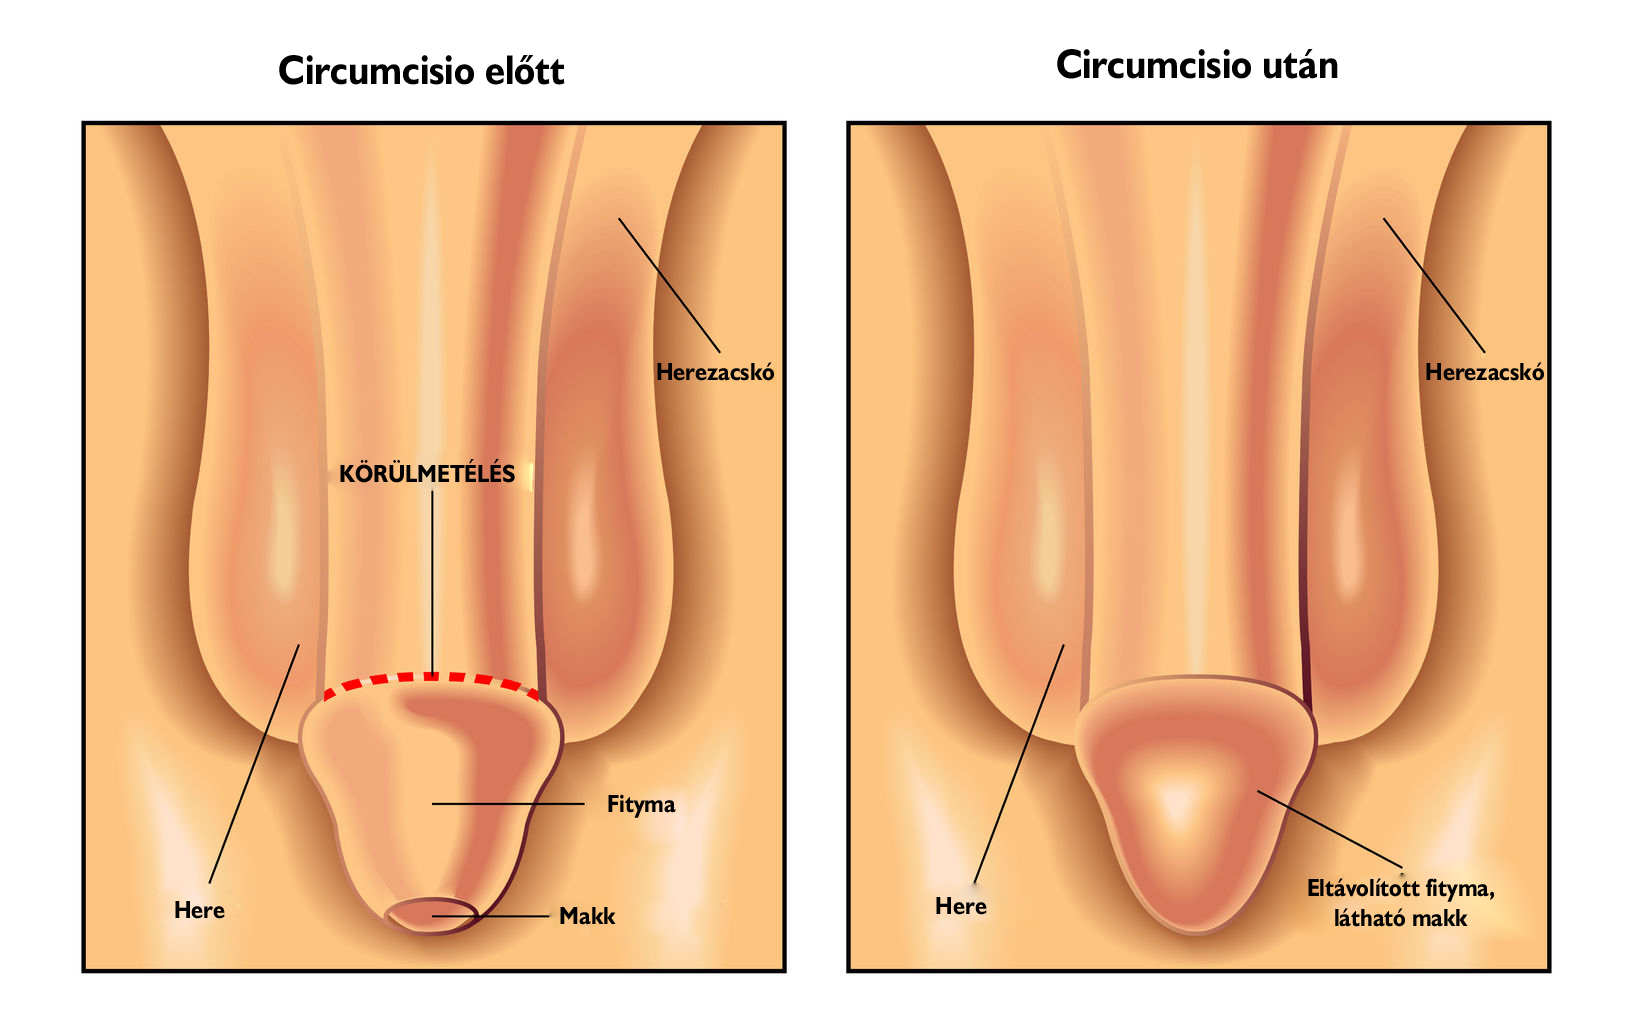 Urológiai műtét - Circumcisio - Körüllmetélés - Medicover Magánkórház